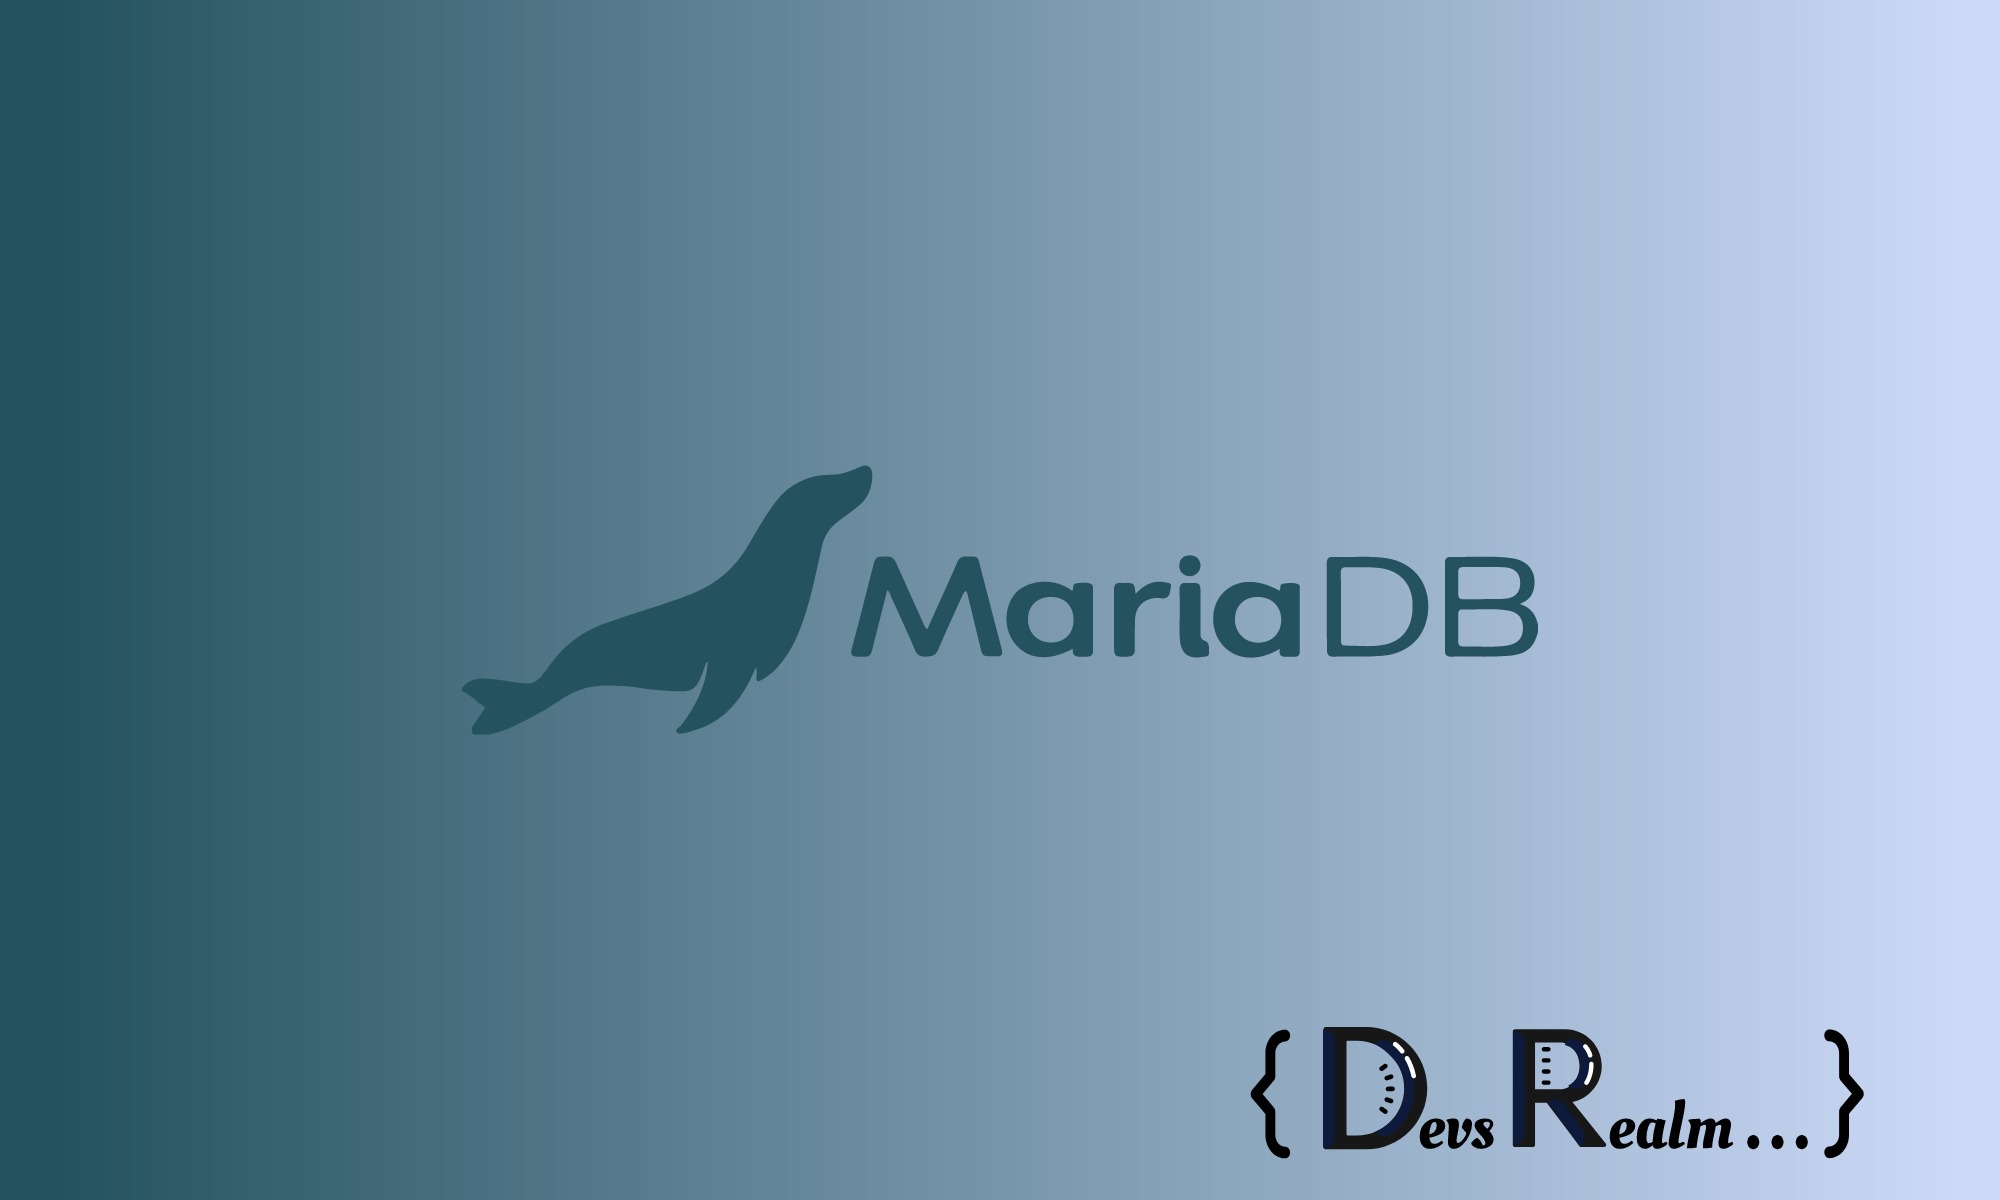 Introduction To MariaDB